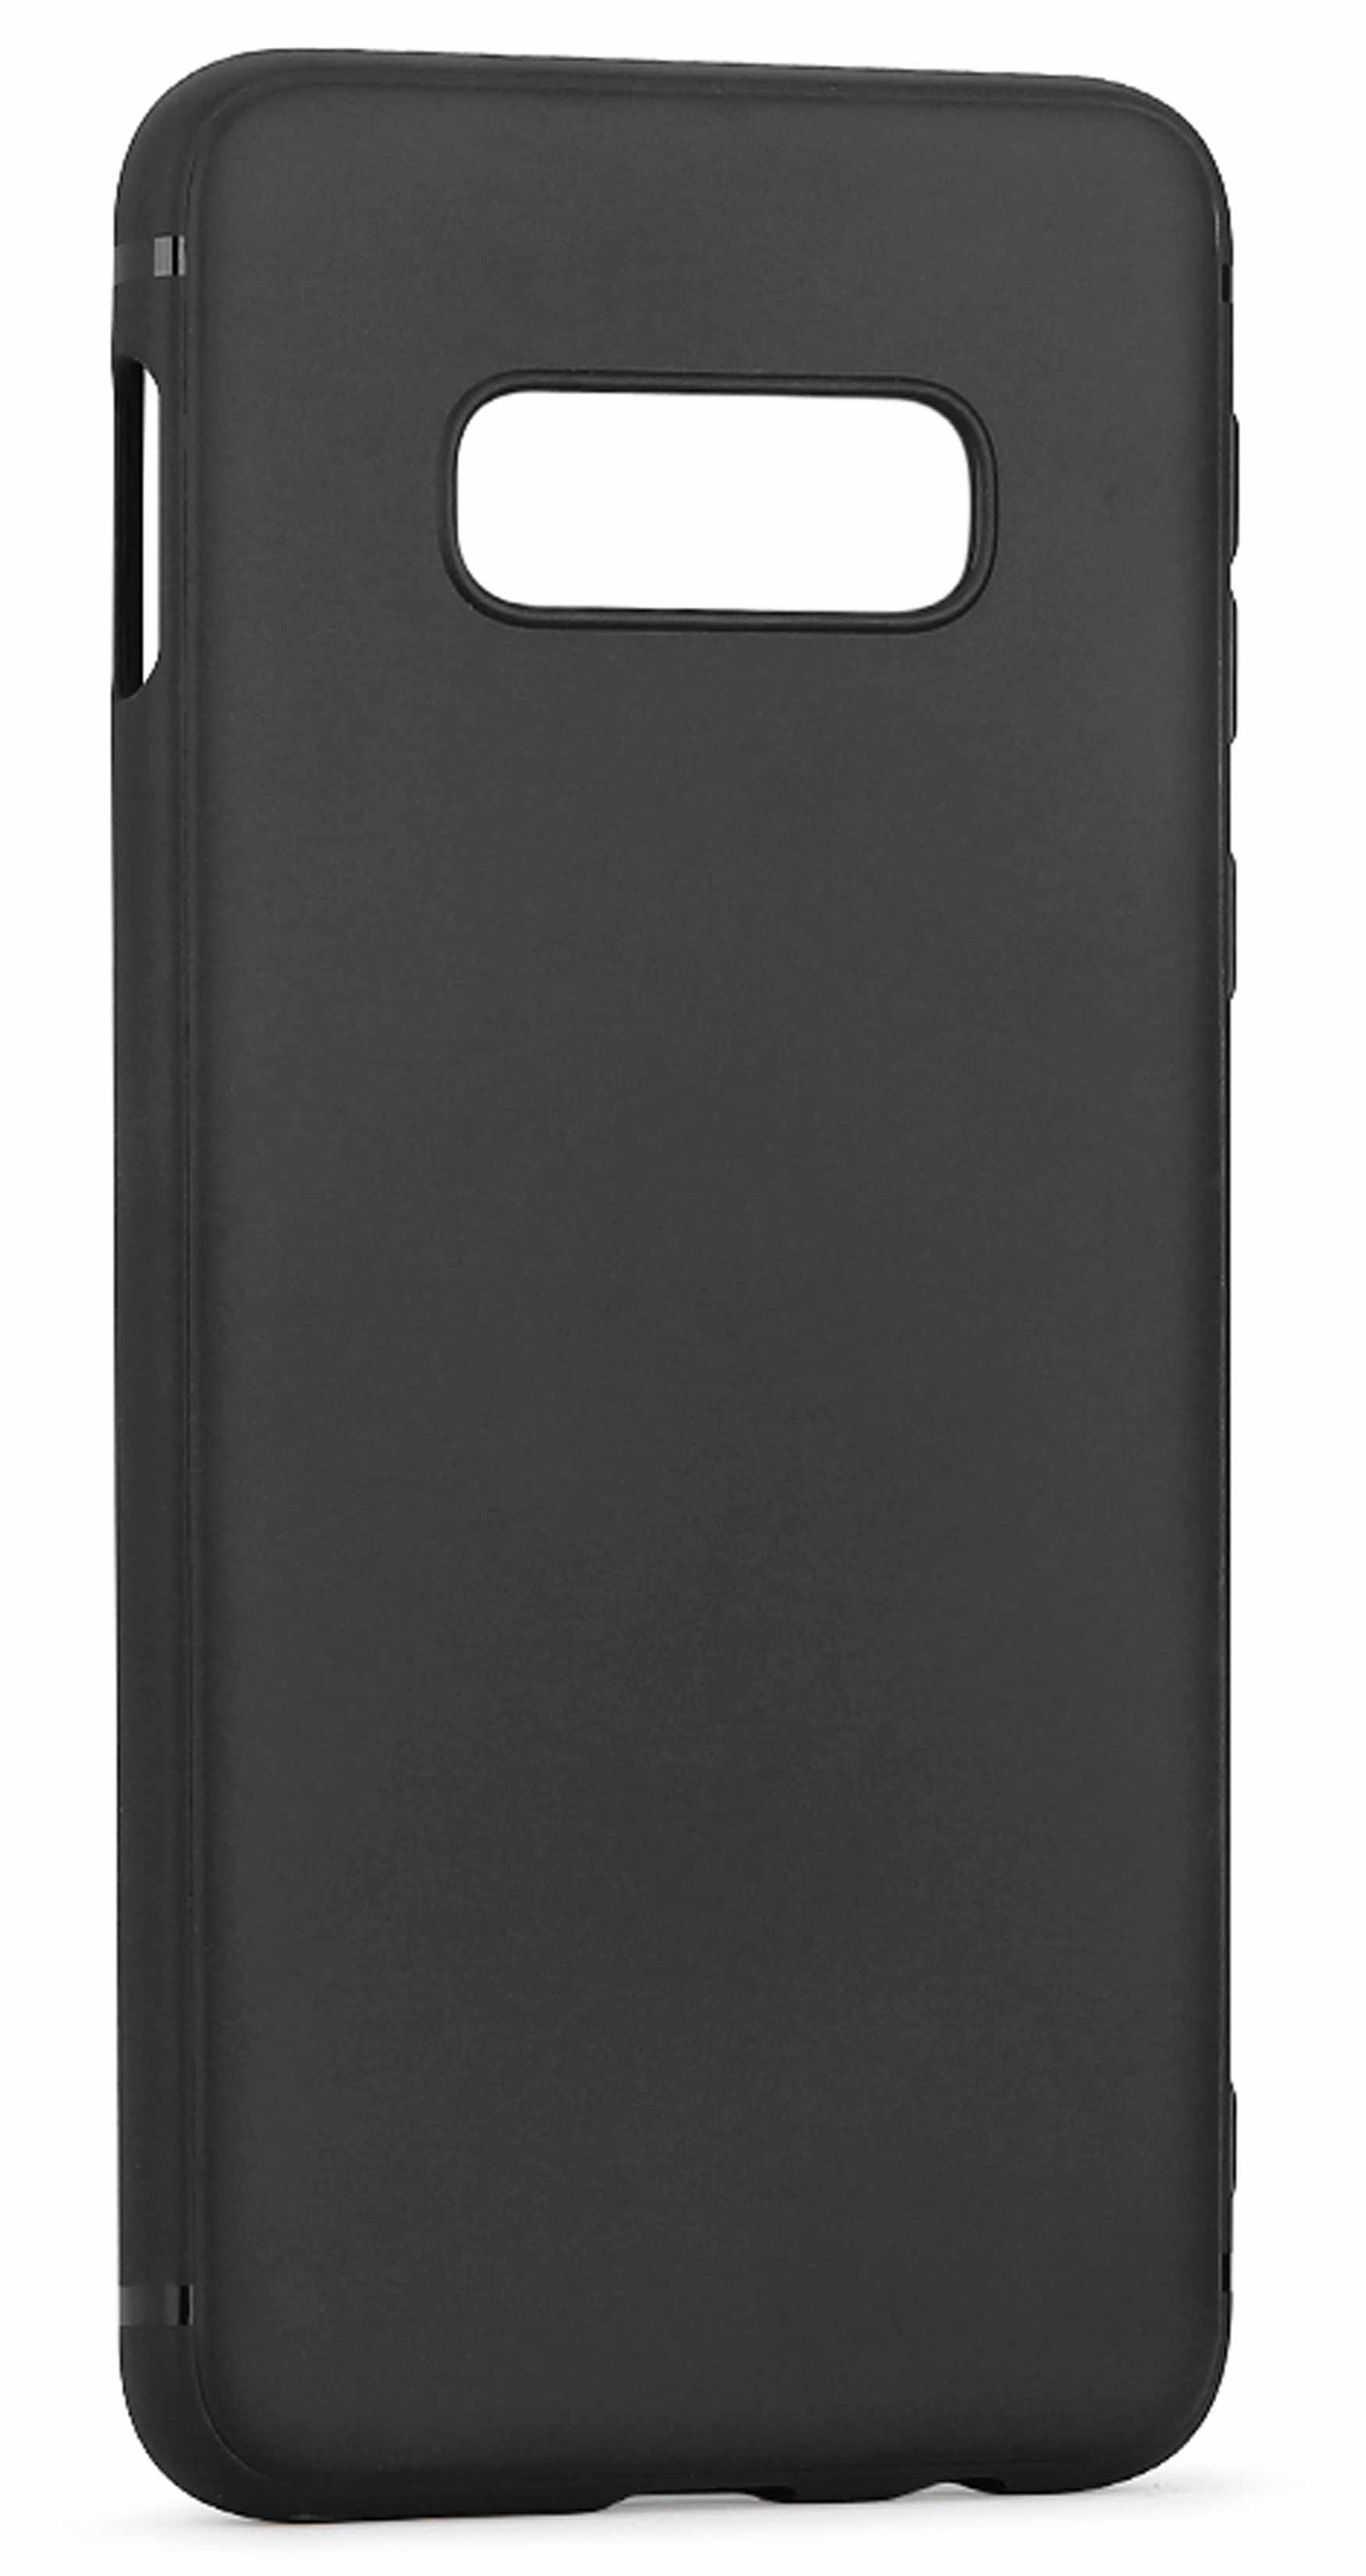 Gel Skin Case Black for Samsung Galaxy S10e